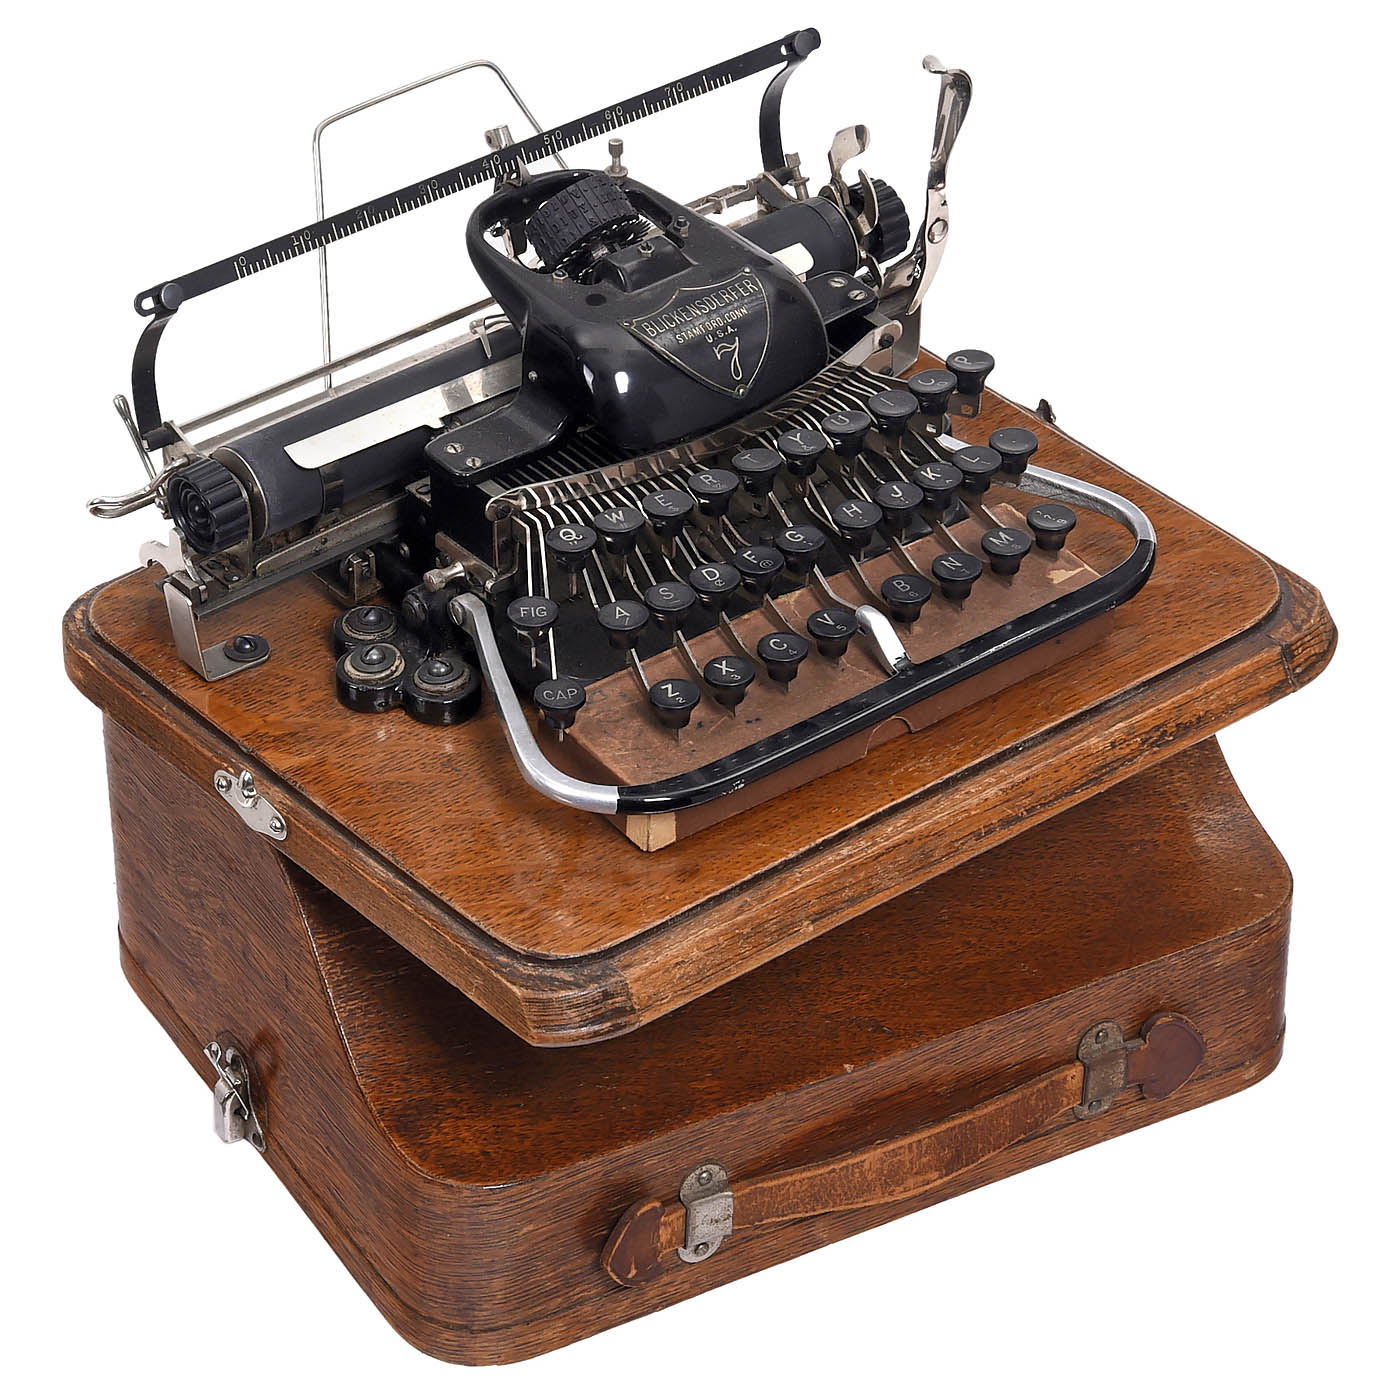 3 Blickensderfer Typewriters - Image 2 of 4